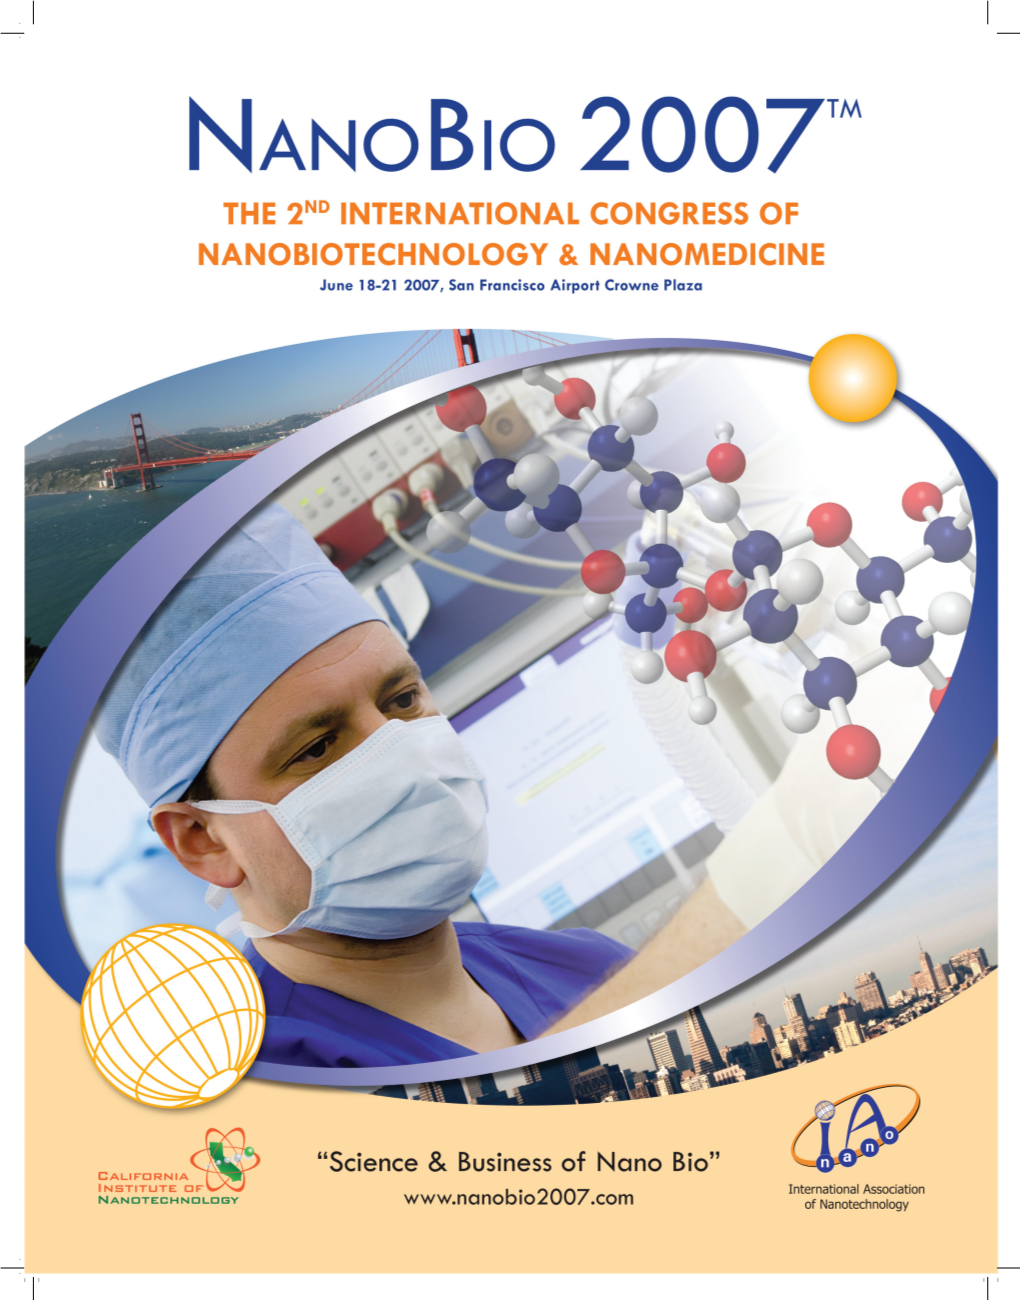 Download the Nanobio 2007 Program Booklet